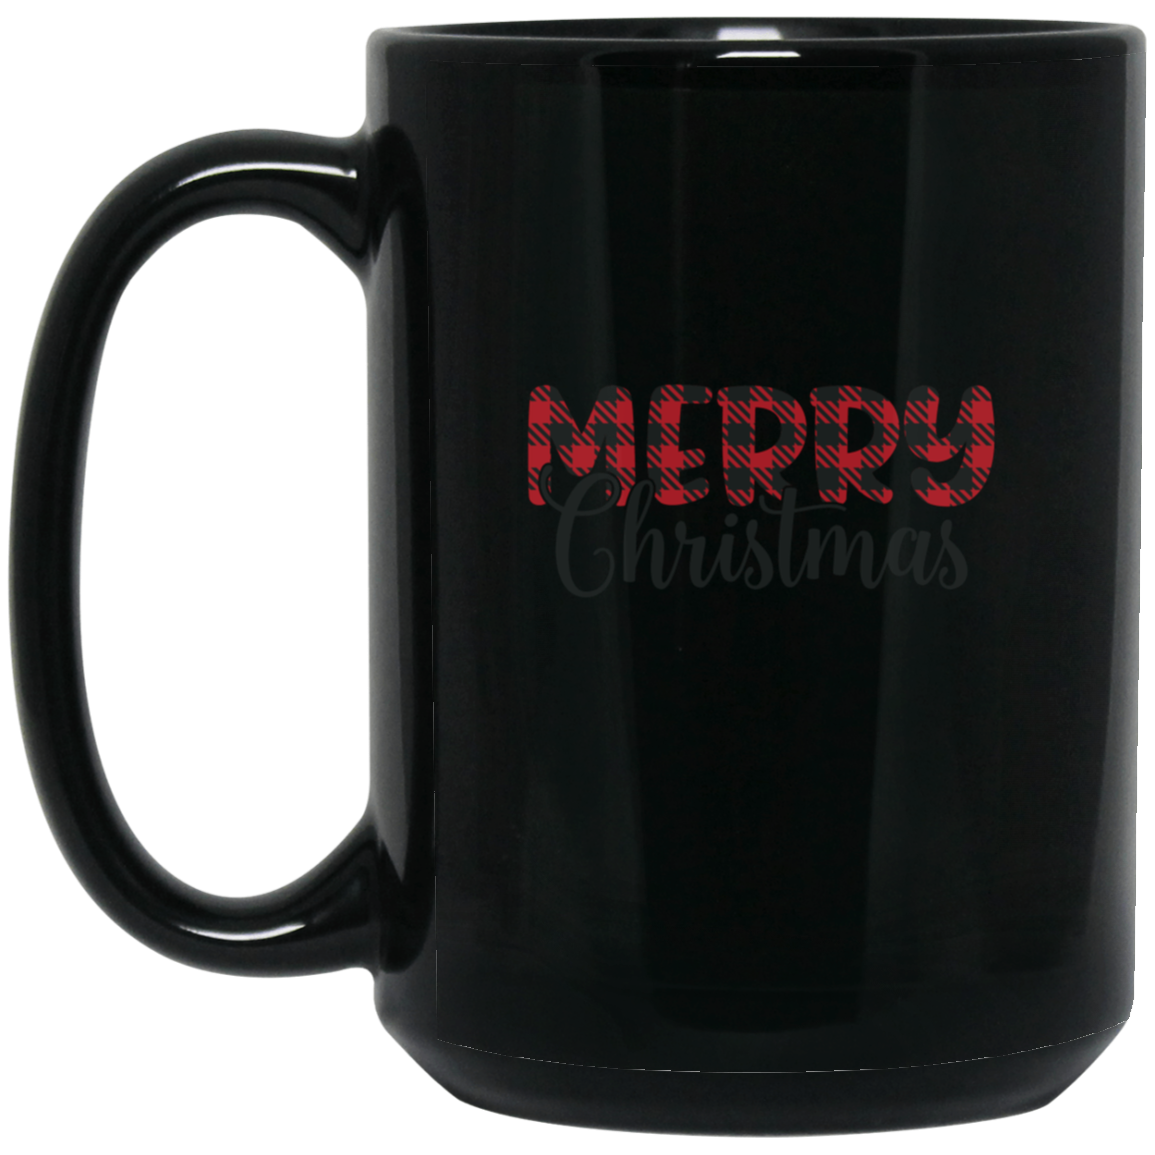 Black and Red Plaid Merry Christmas 15oz. Mug